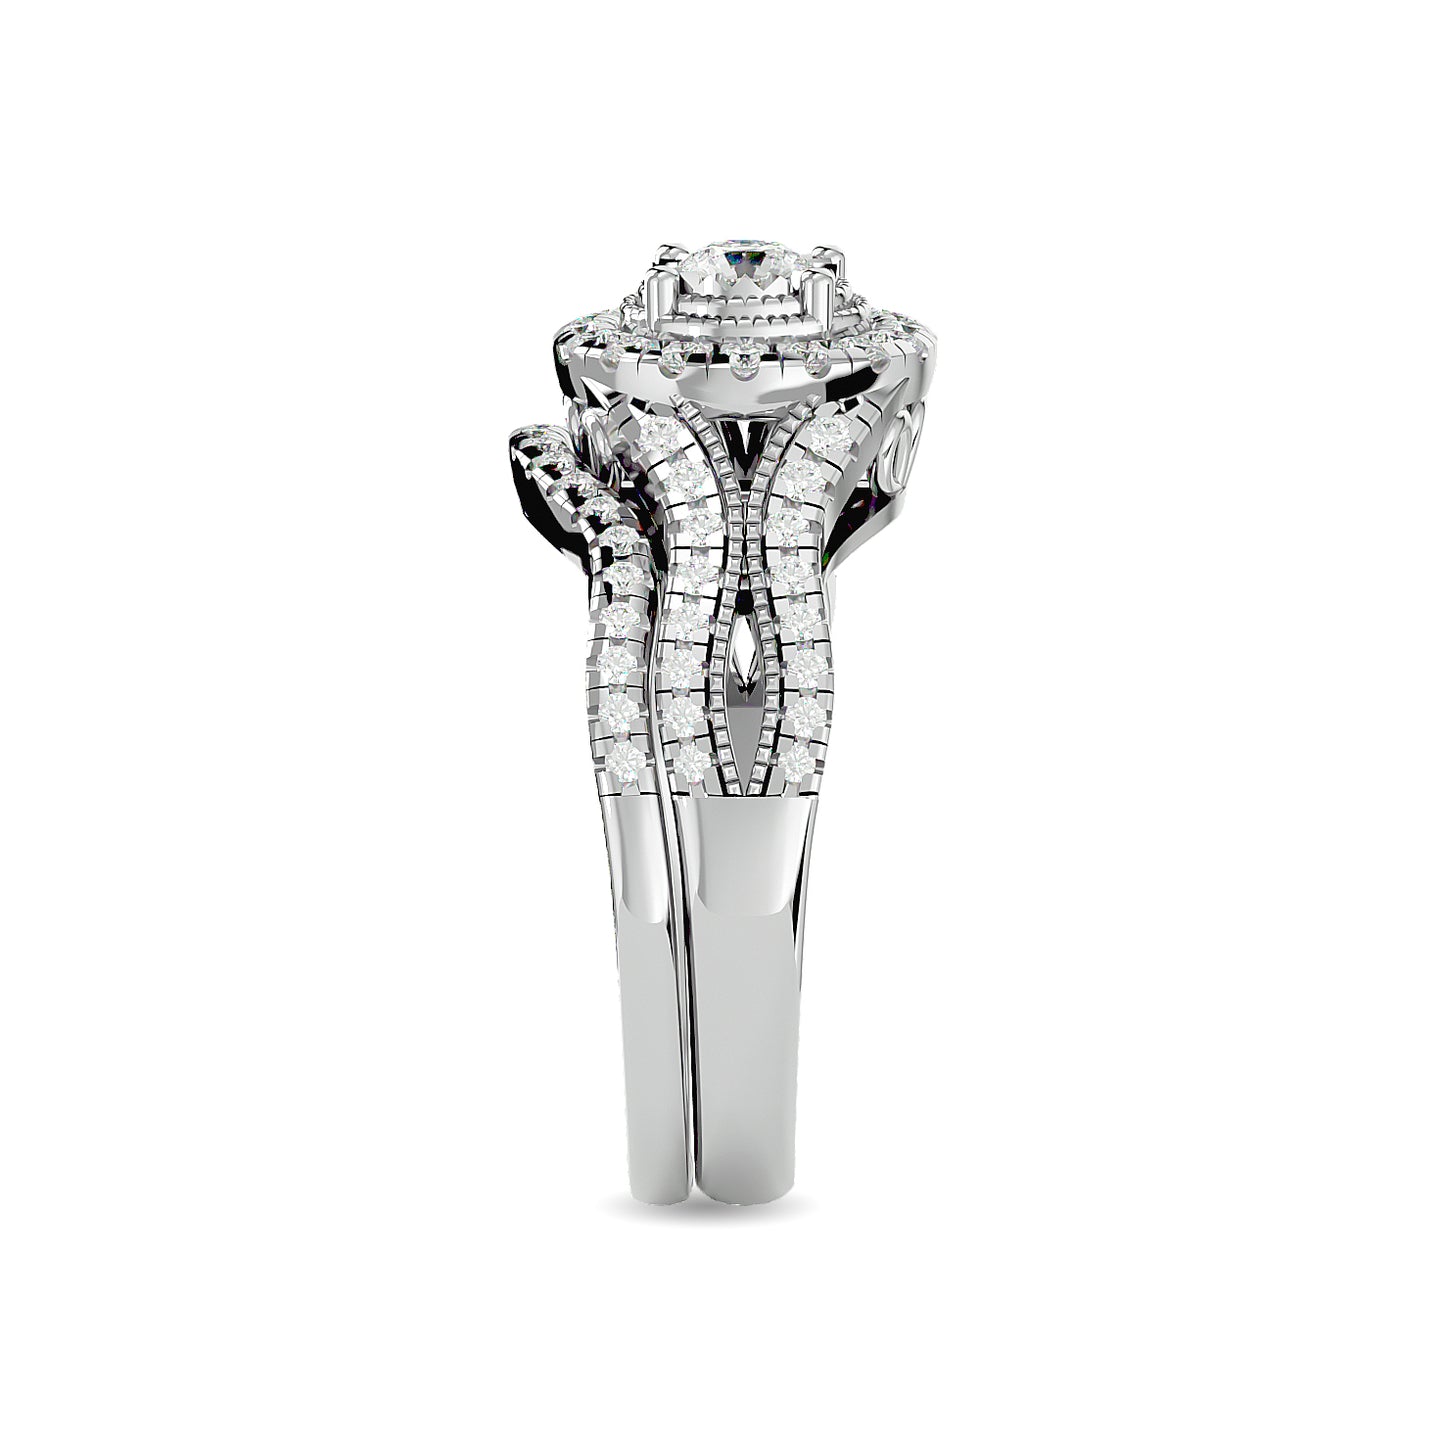 Diamond 3/4 Ct.Tw. Bridal Ring in 14K White Gold